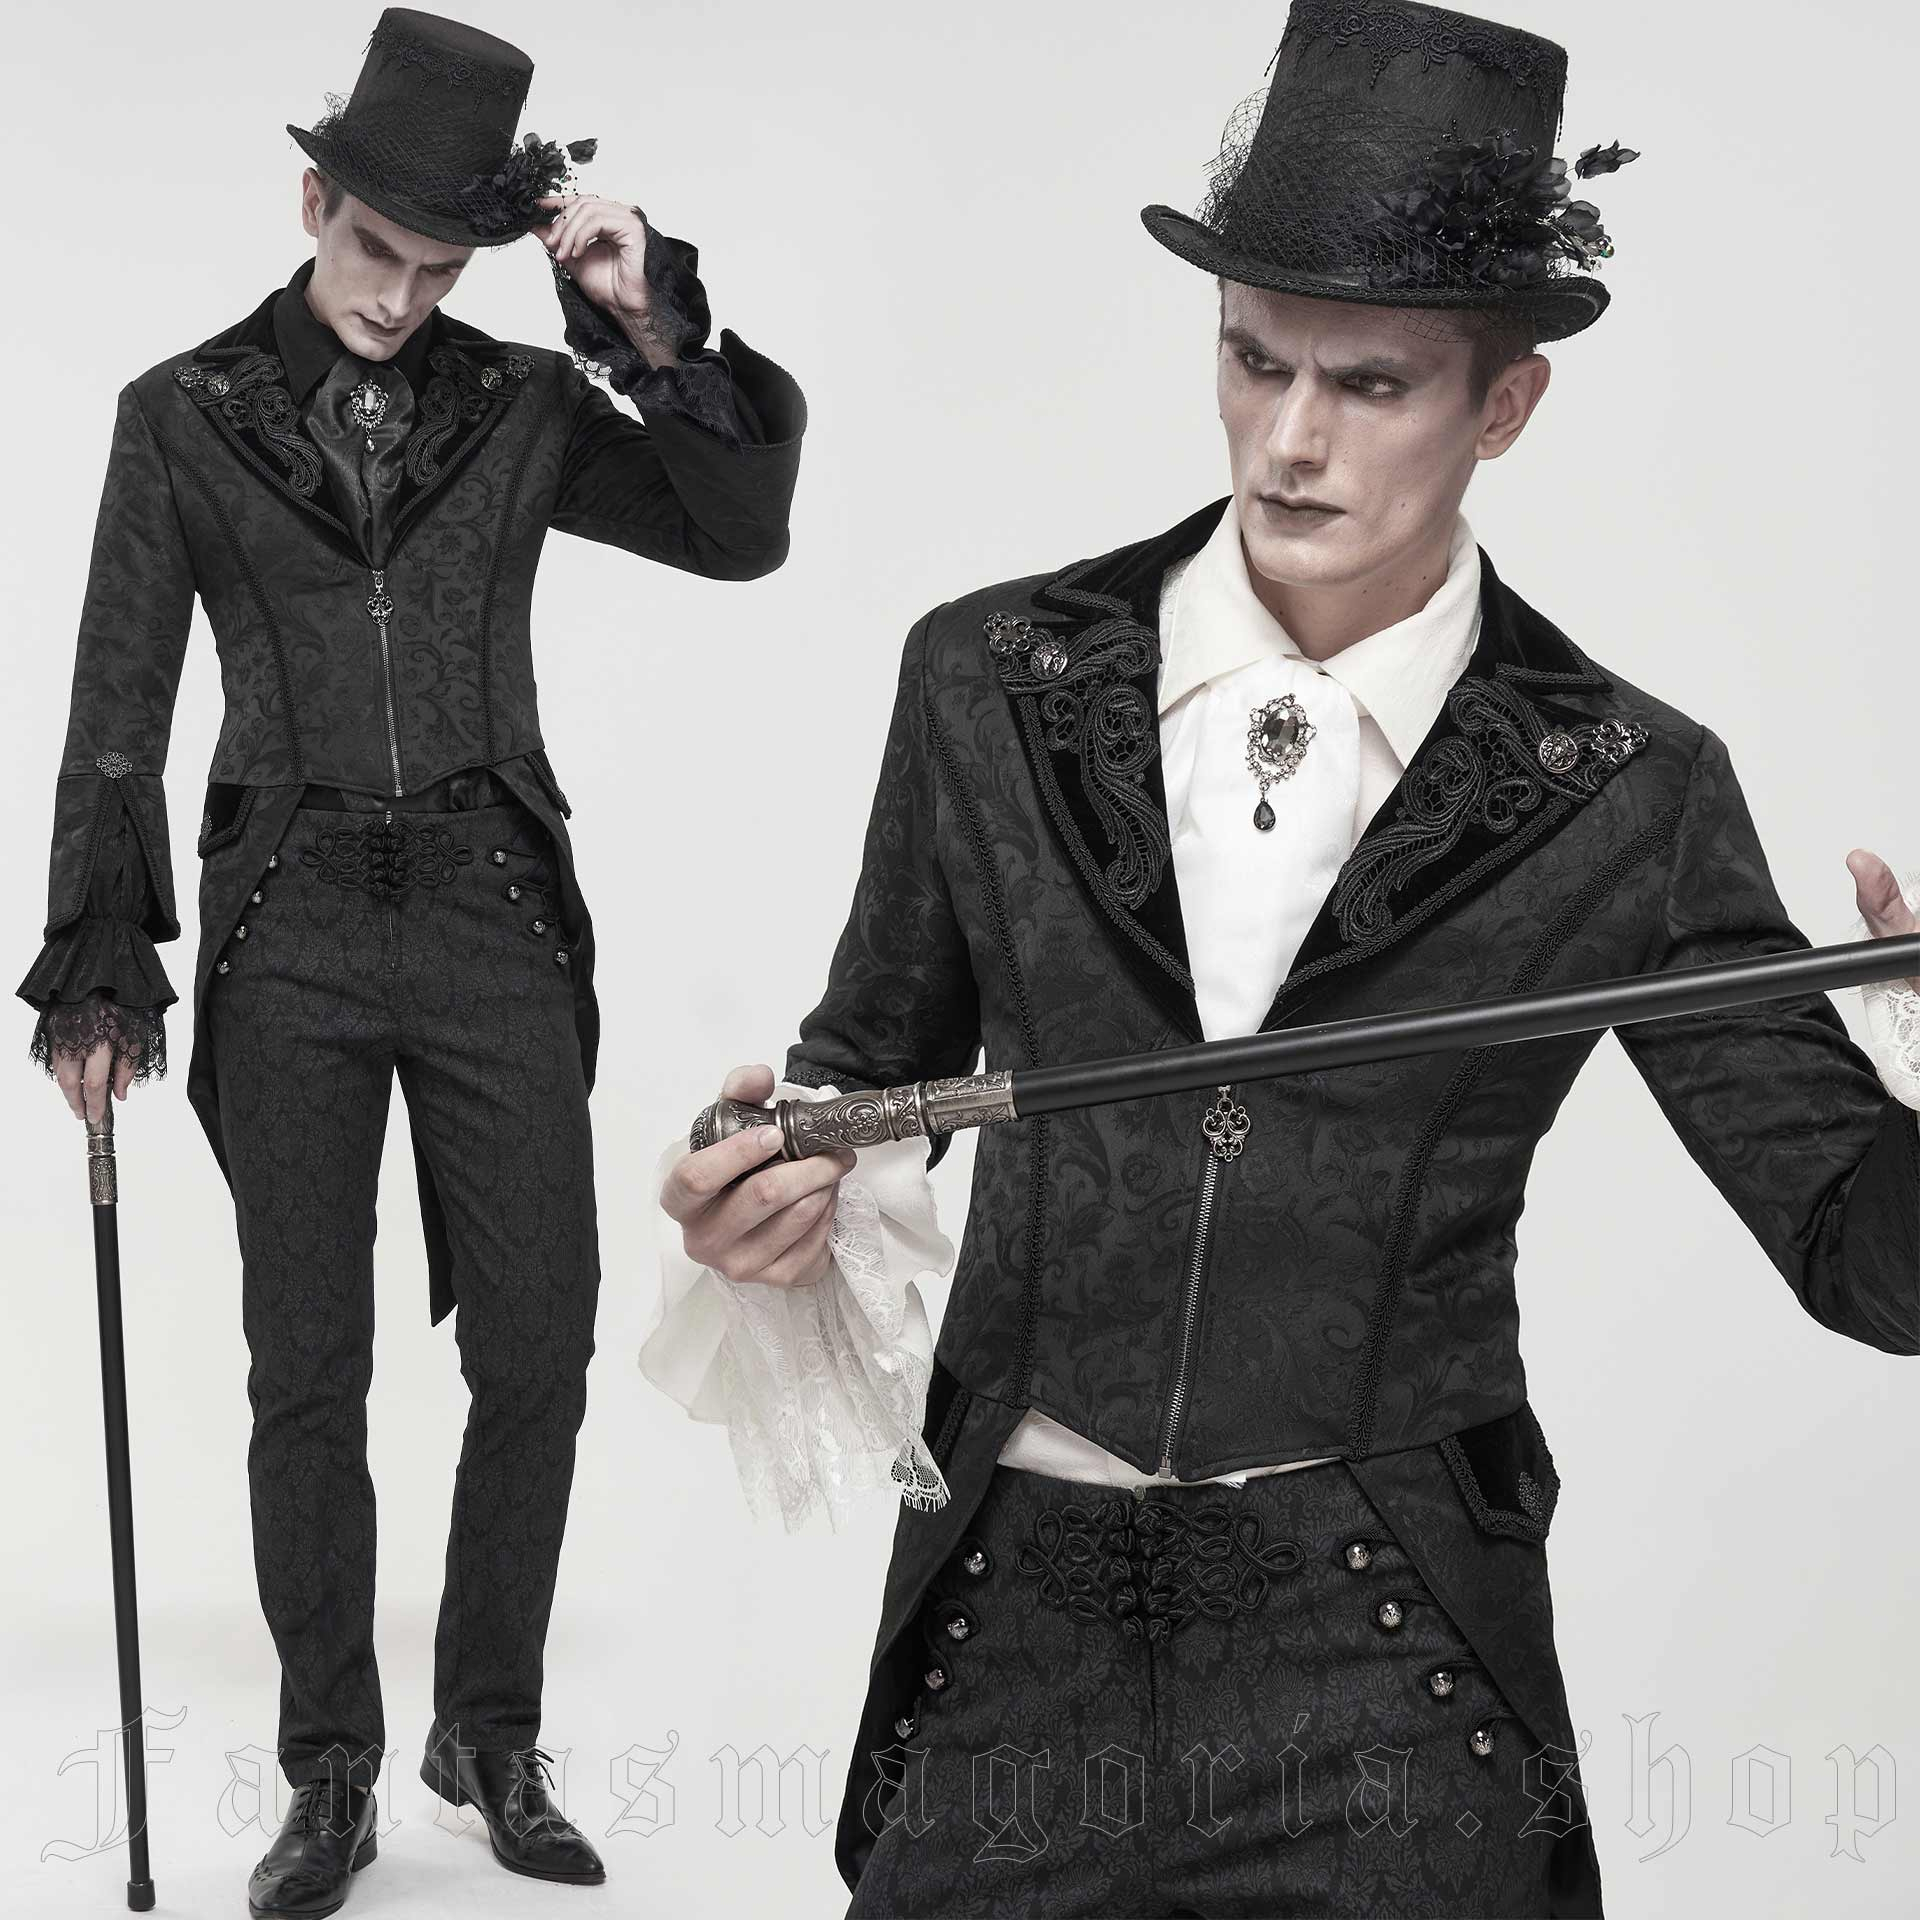 Devil Fashion CT022 Men's Vampire Victorian Gothic Jacket - Black